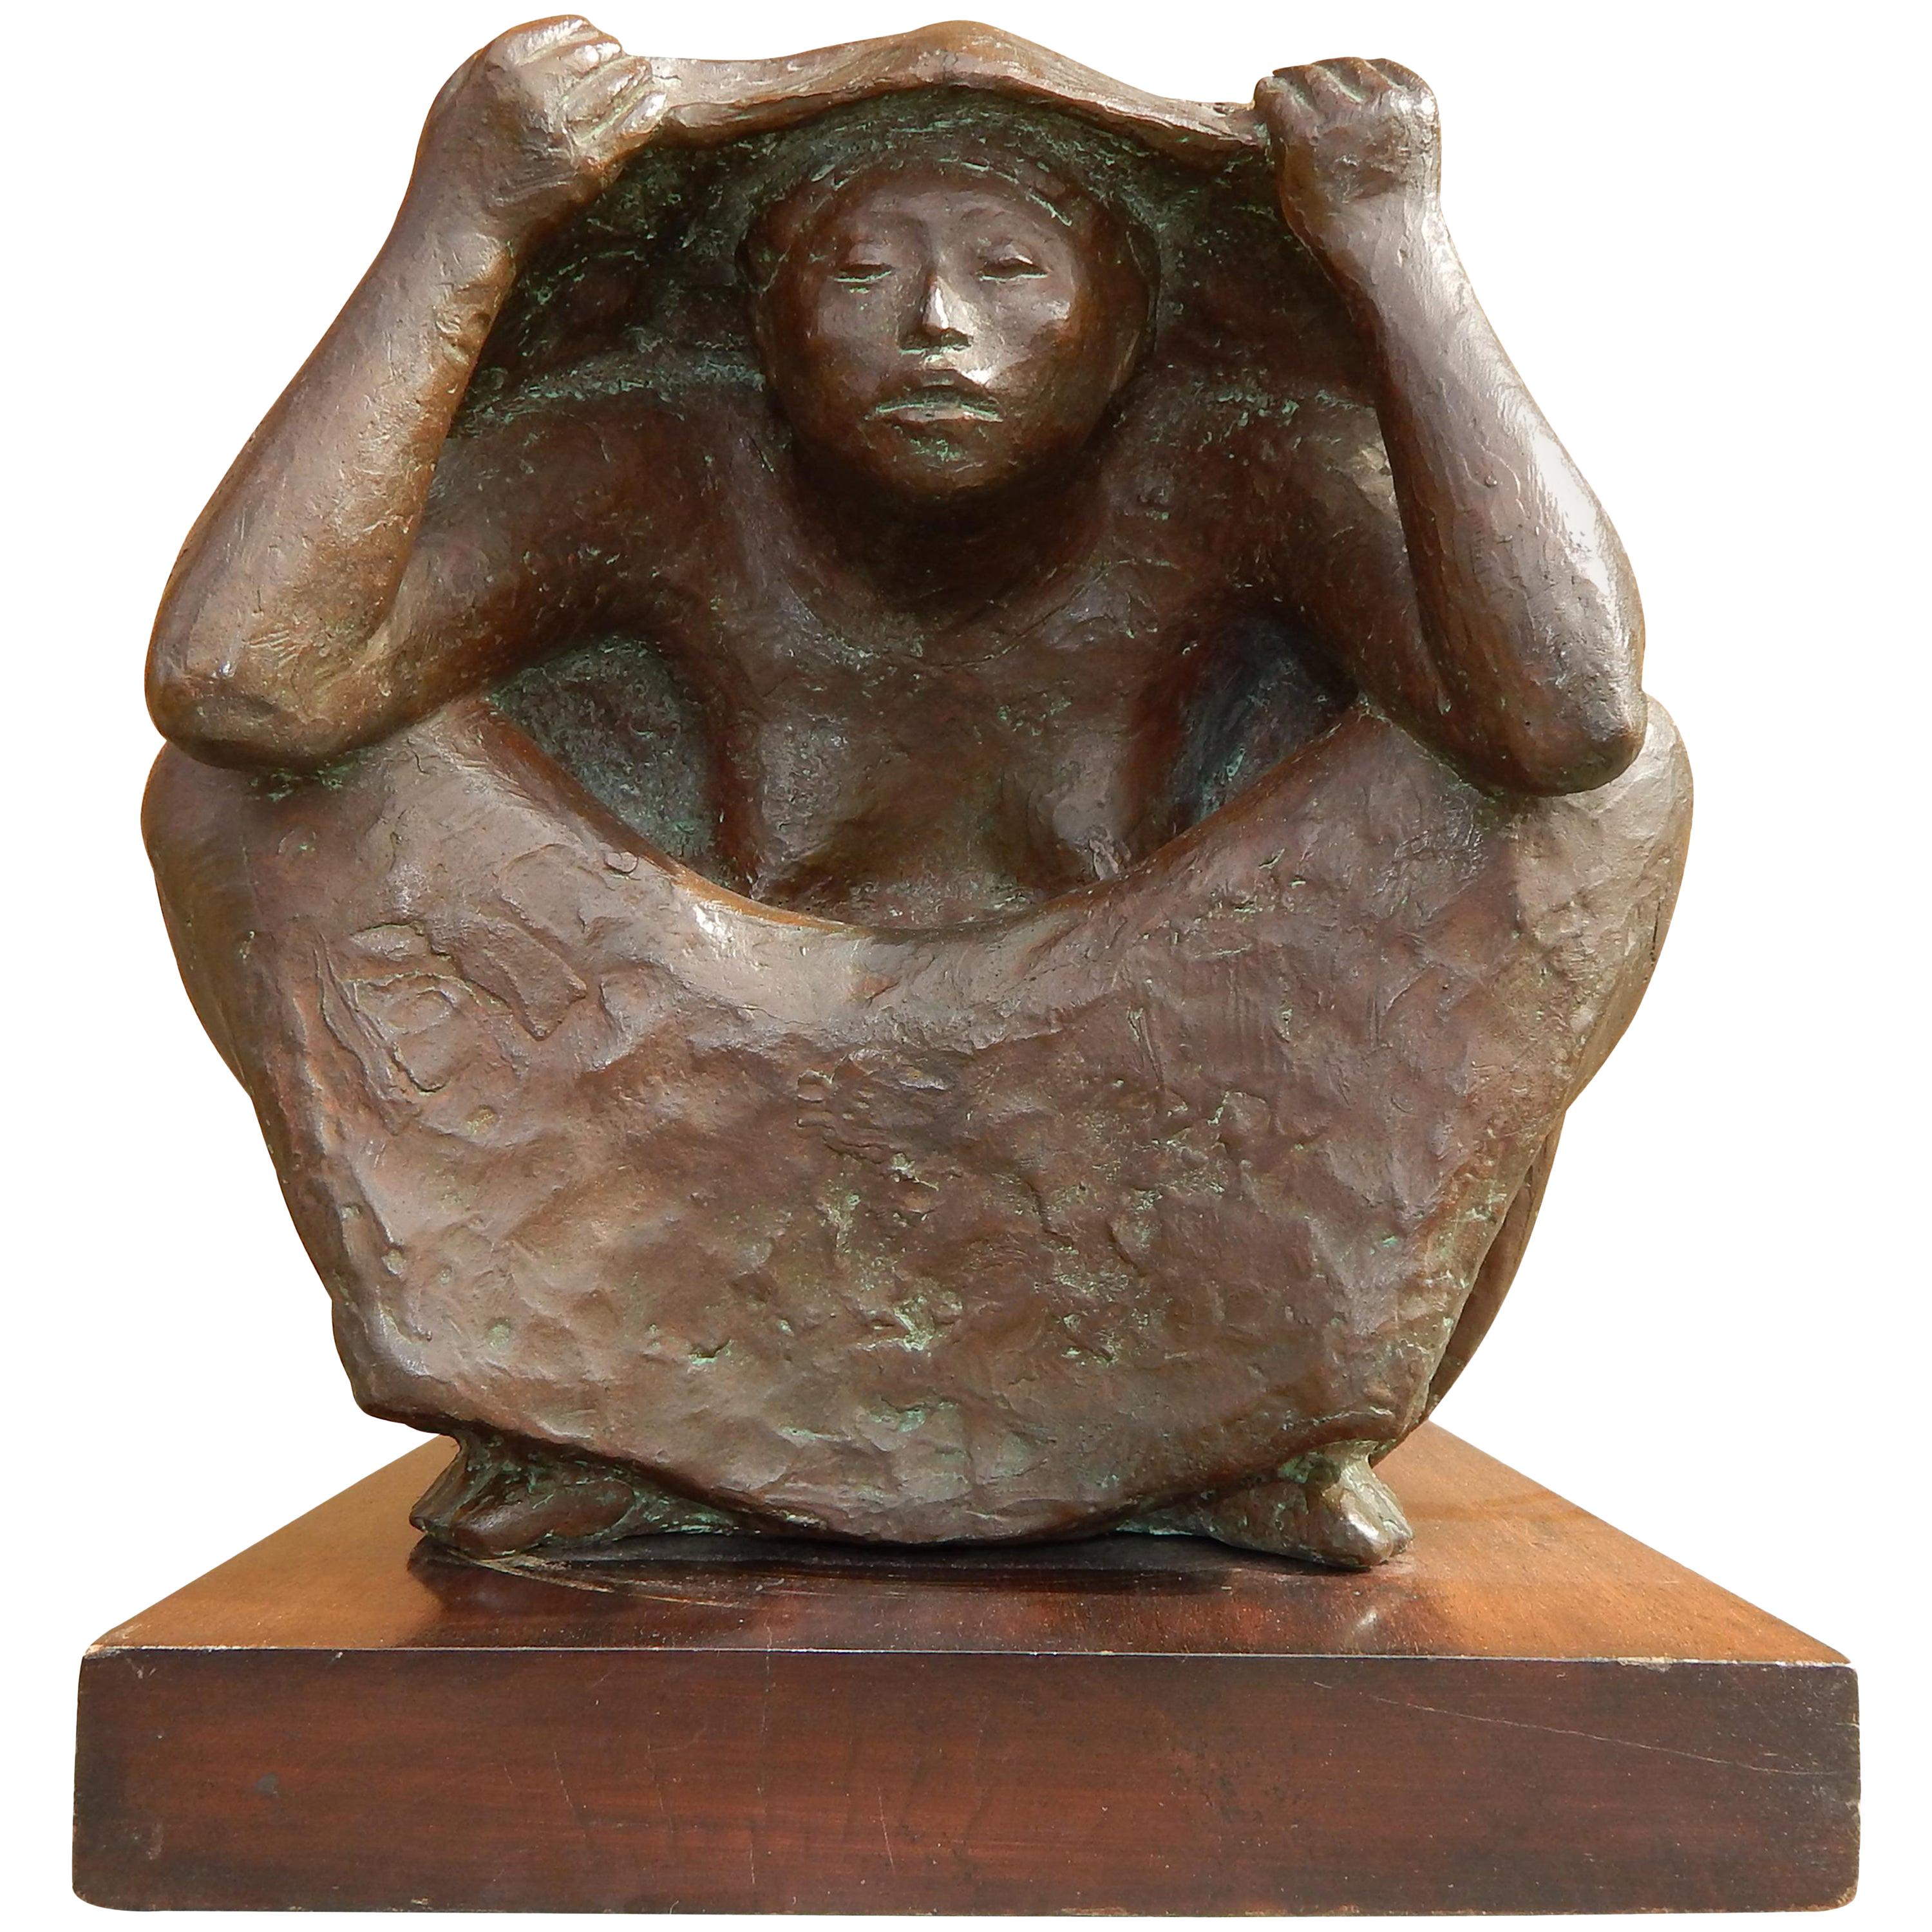 Francisco Zuniga Bronze, 1965, Titled "Ritual"